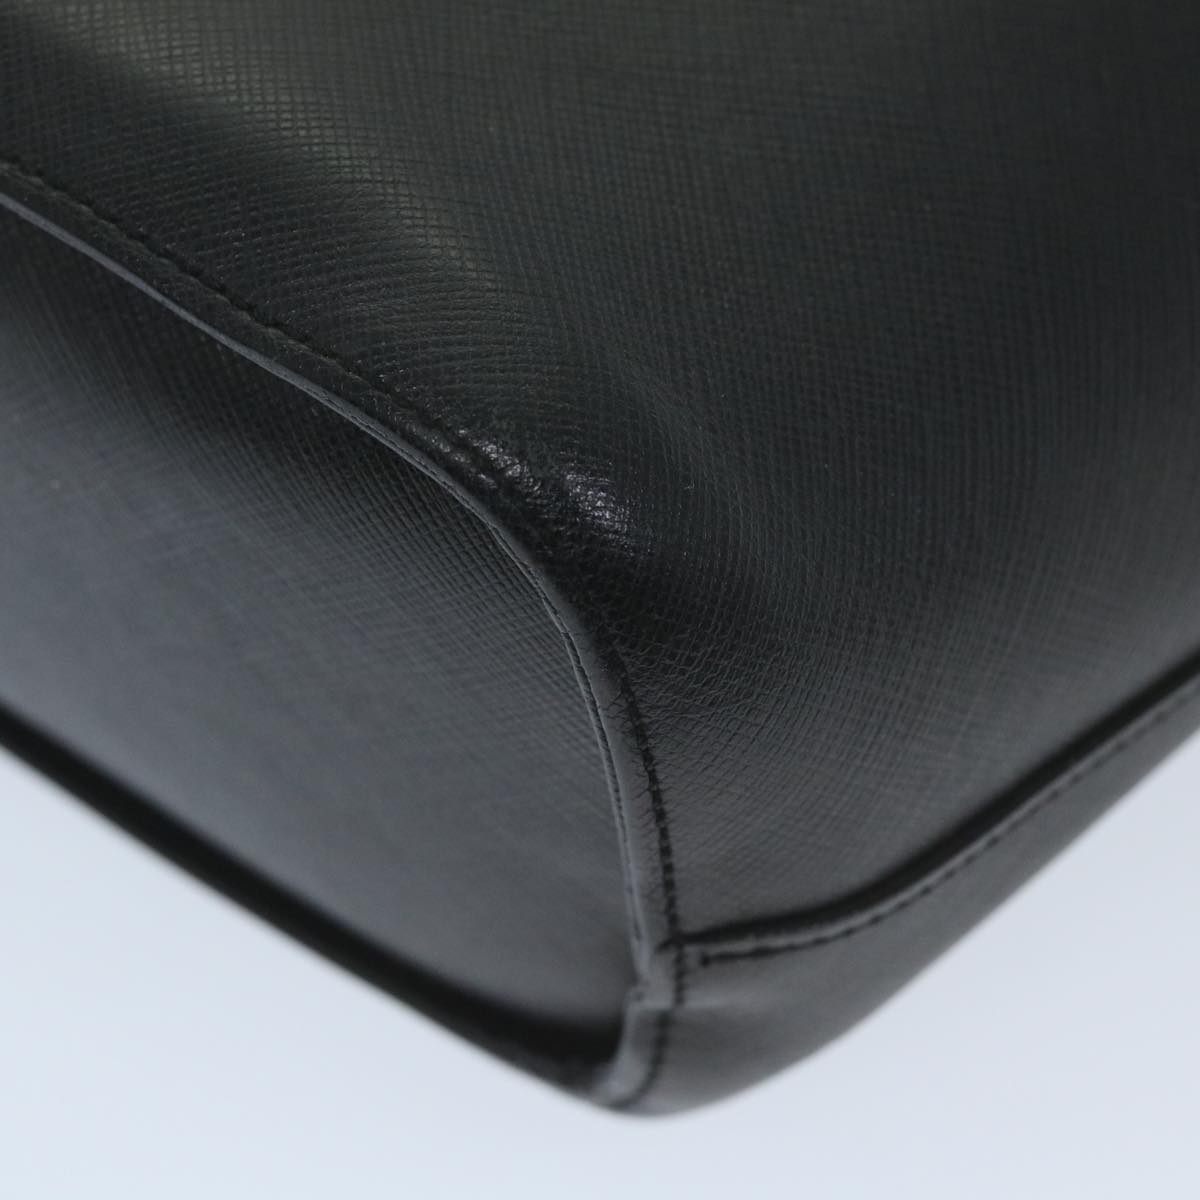 Burberrys Shoulder Bag Leather Black Auth ep2237